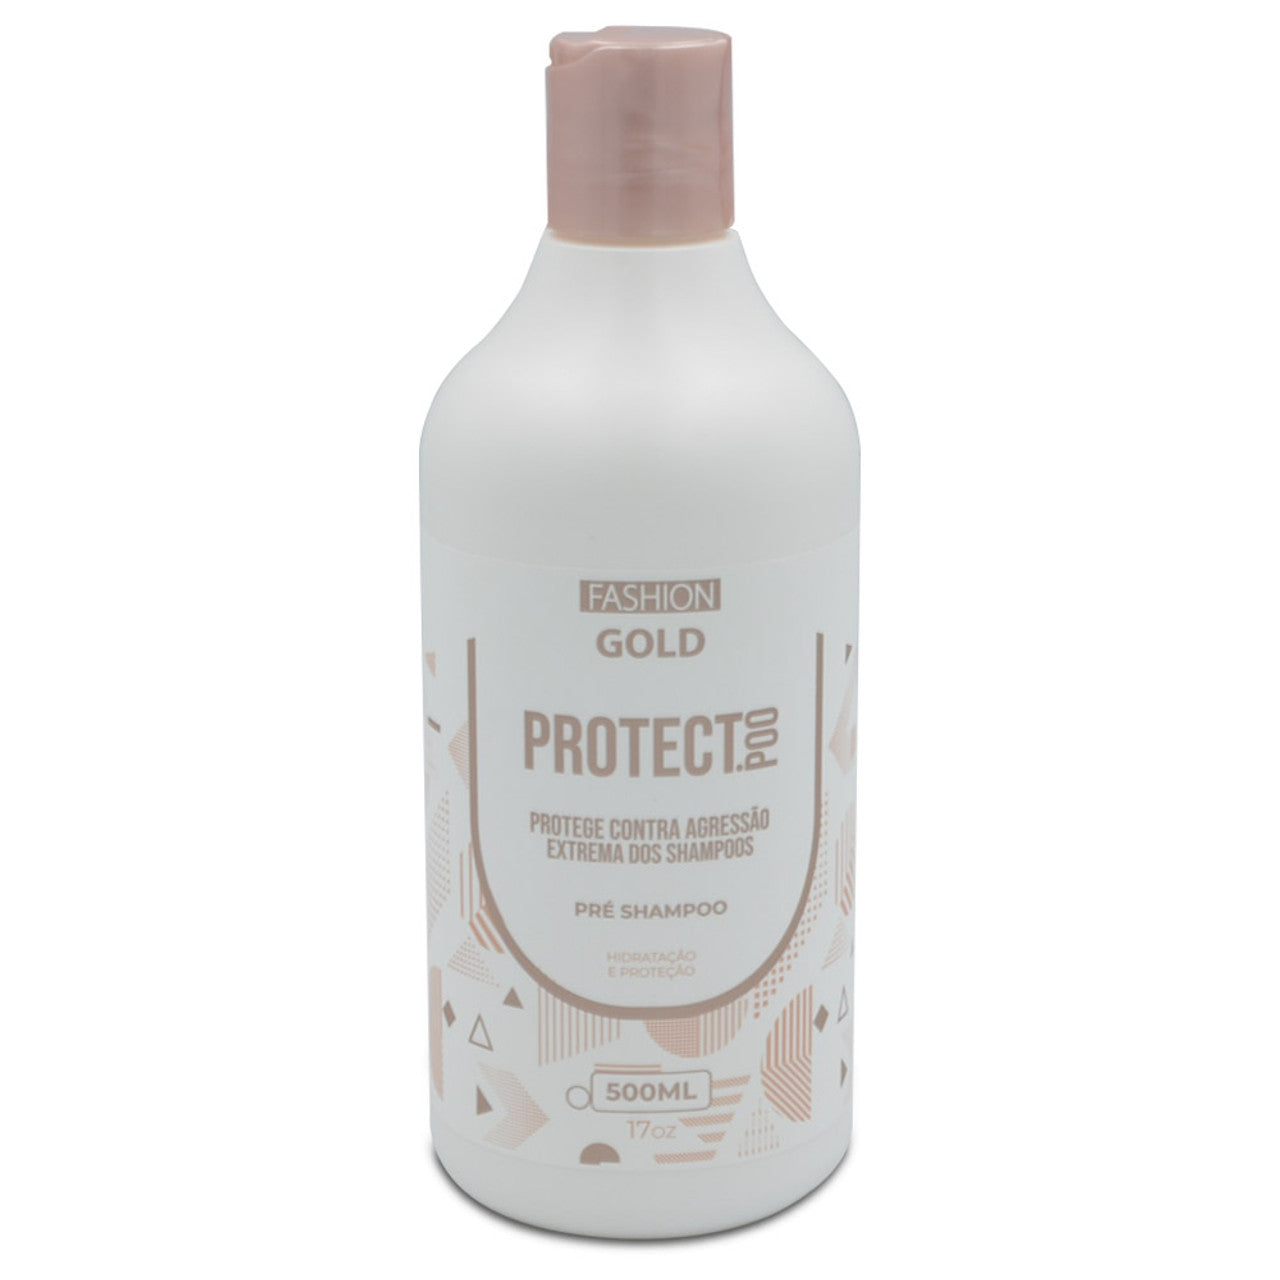 Pré-shampoo Protect Poo Poo 250ml - Fashion Gold